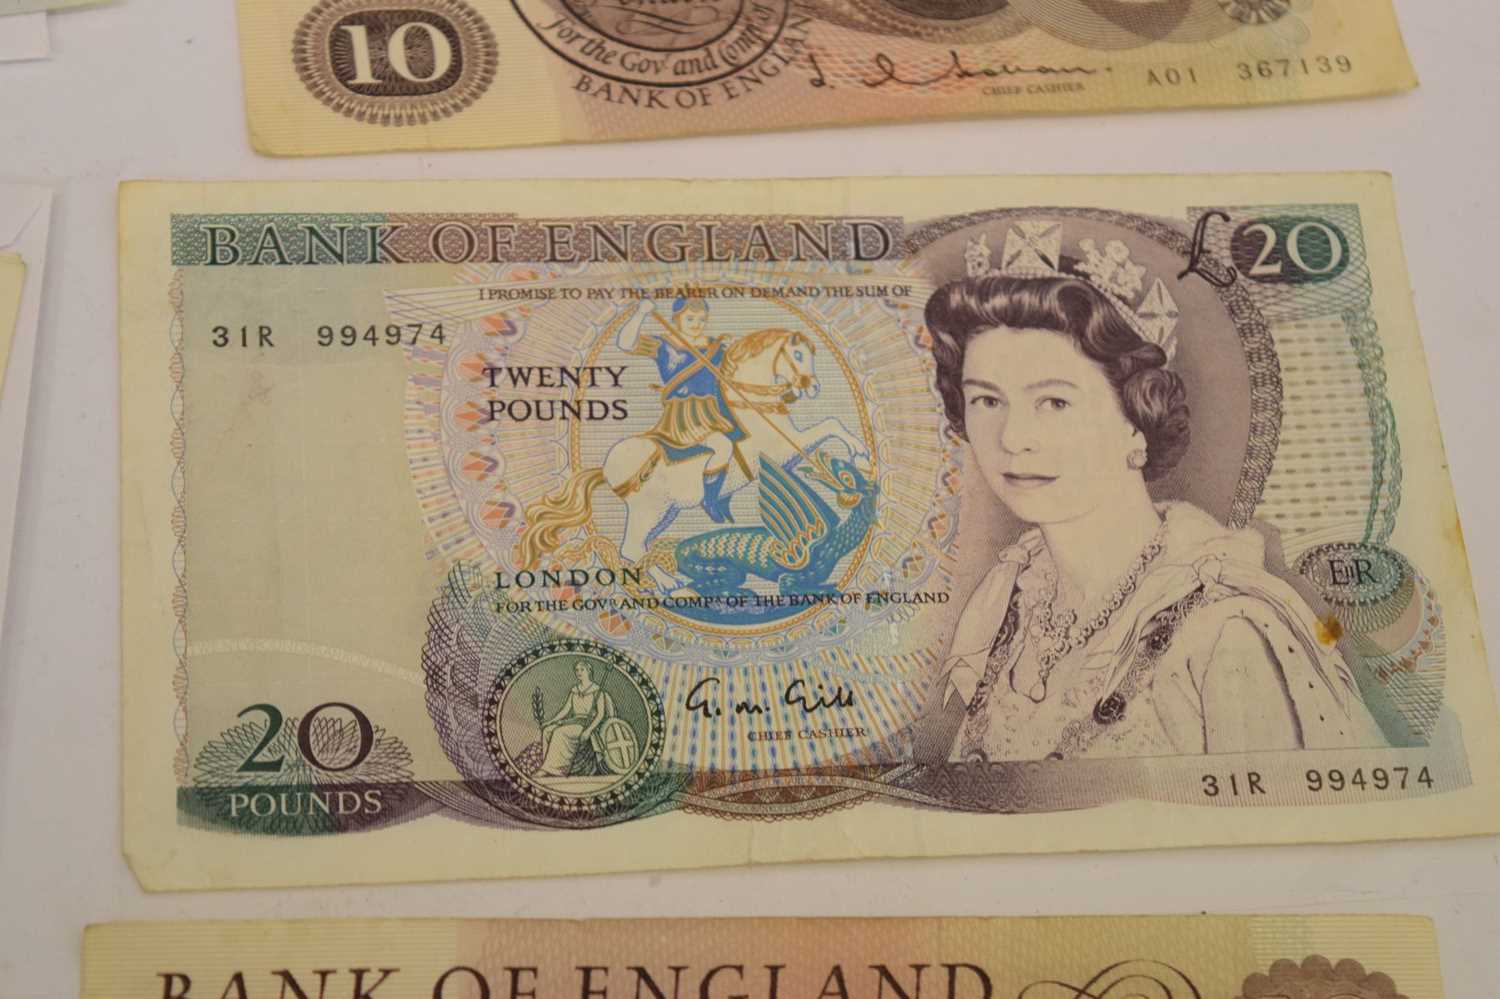 Collection of Elizabeth II Bank of England banknotes - Image 7 of 10